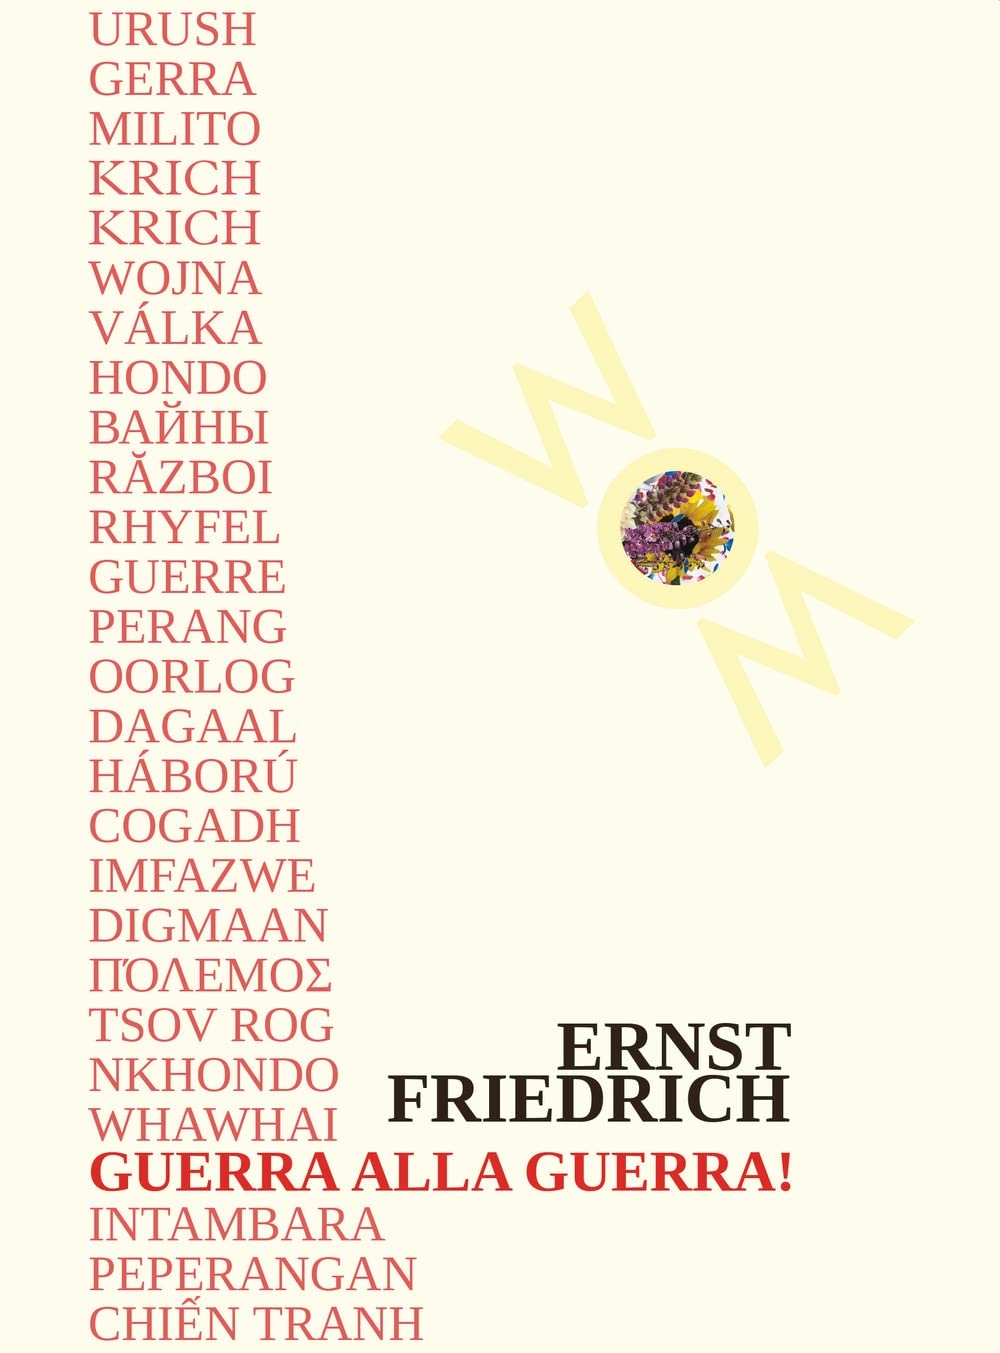 Ernst Friedich – Guerra alla guerra! (WoM Edizioni, San Gavino Monreale 2022)